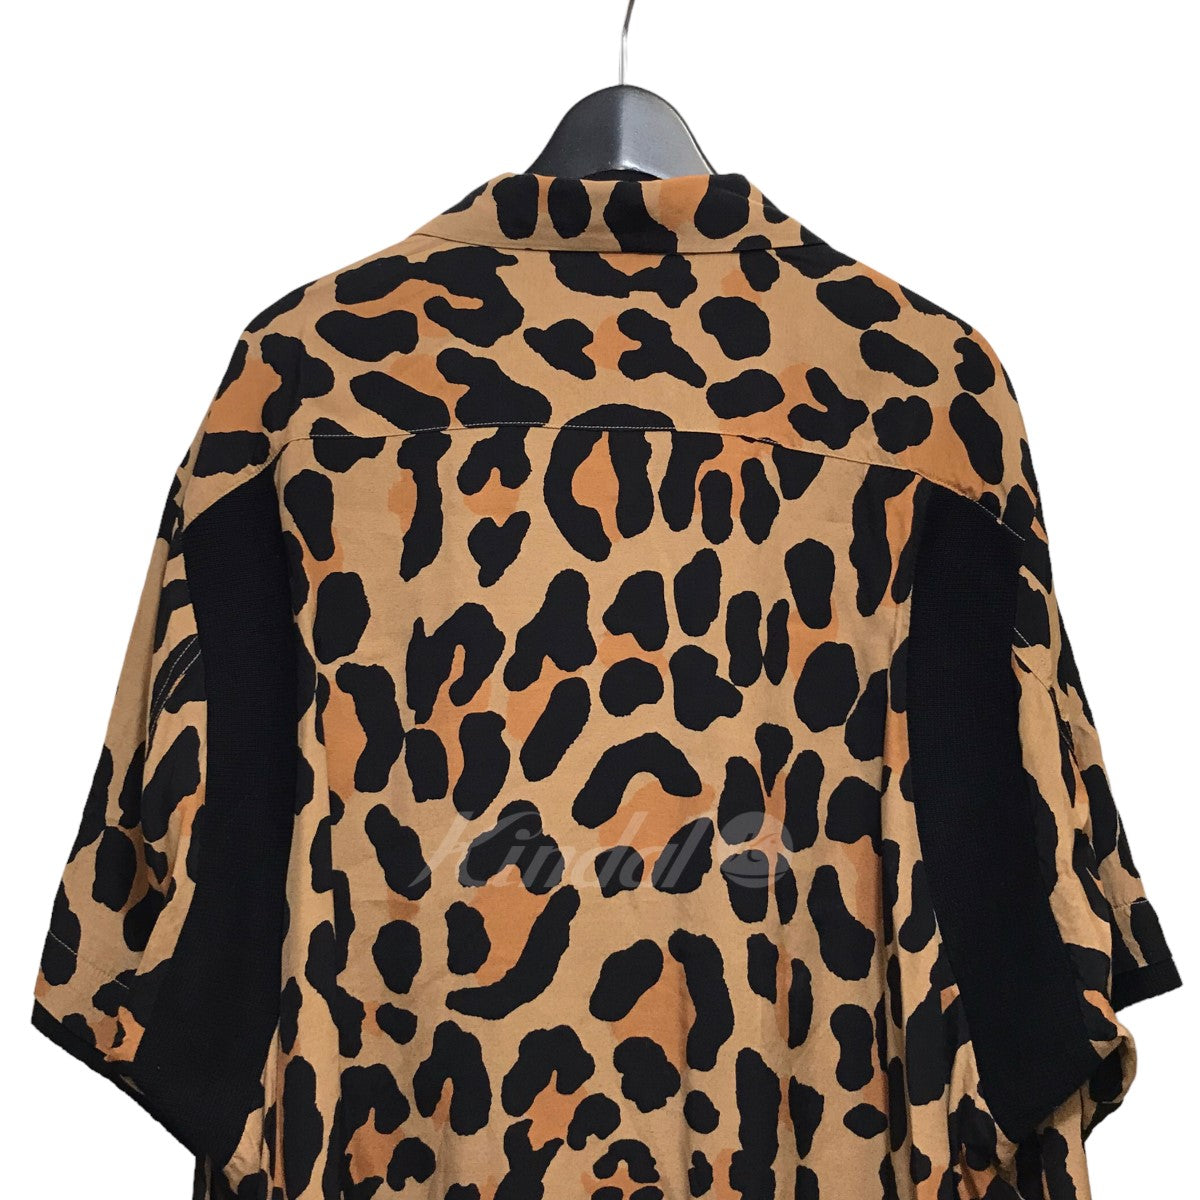 sacai(サカイ) 22SS「Leopard Print Bowling Shirt」レオパードプリントボウリングシャツ